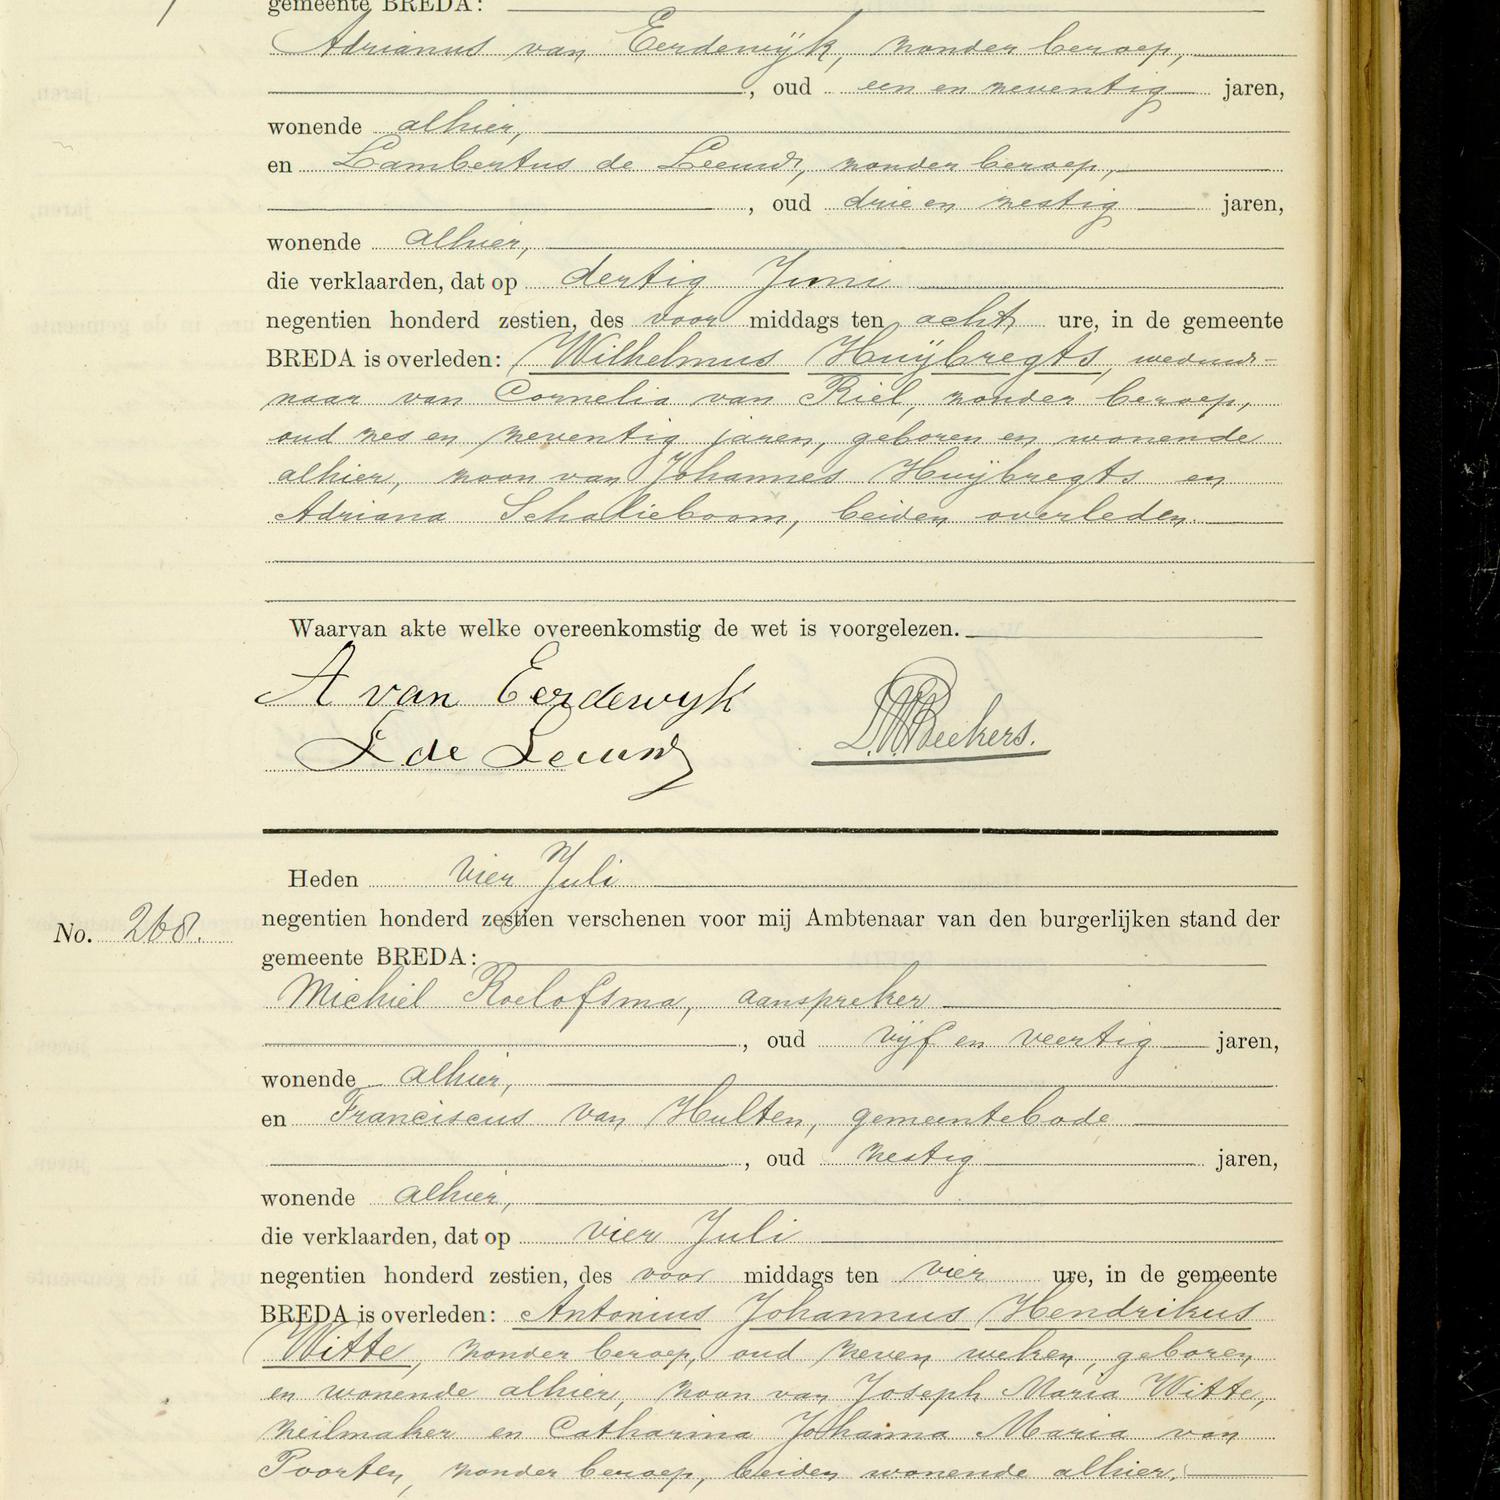 Civil registry of deaths, Breda, 1916, records 267-268